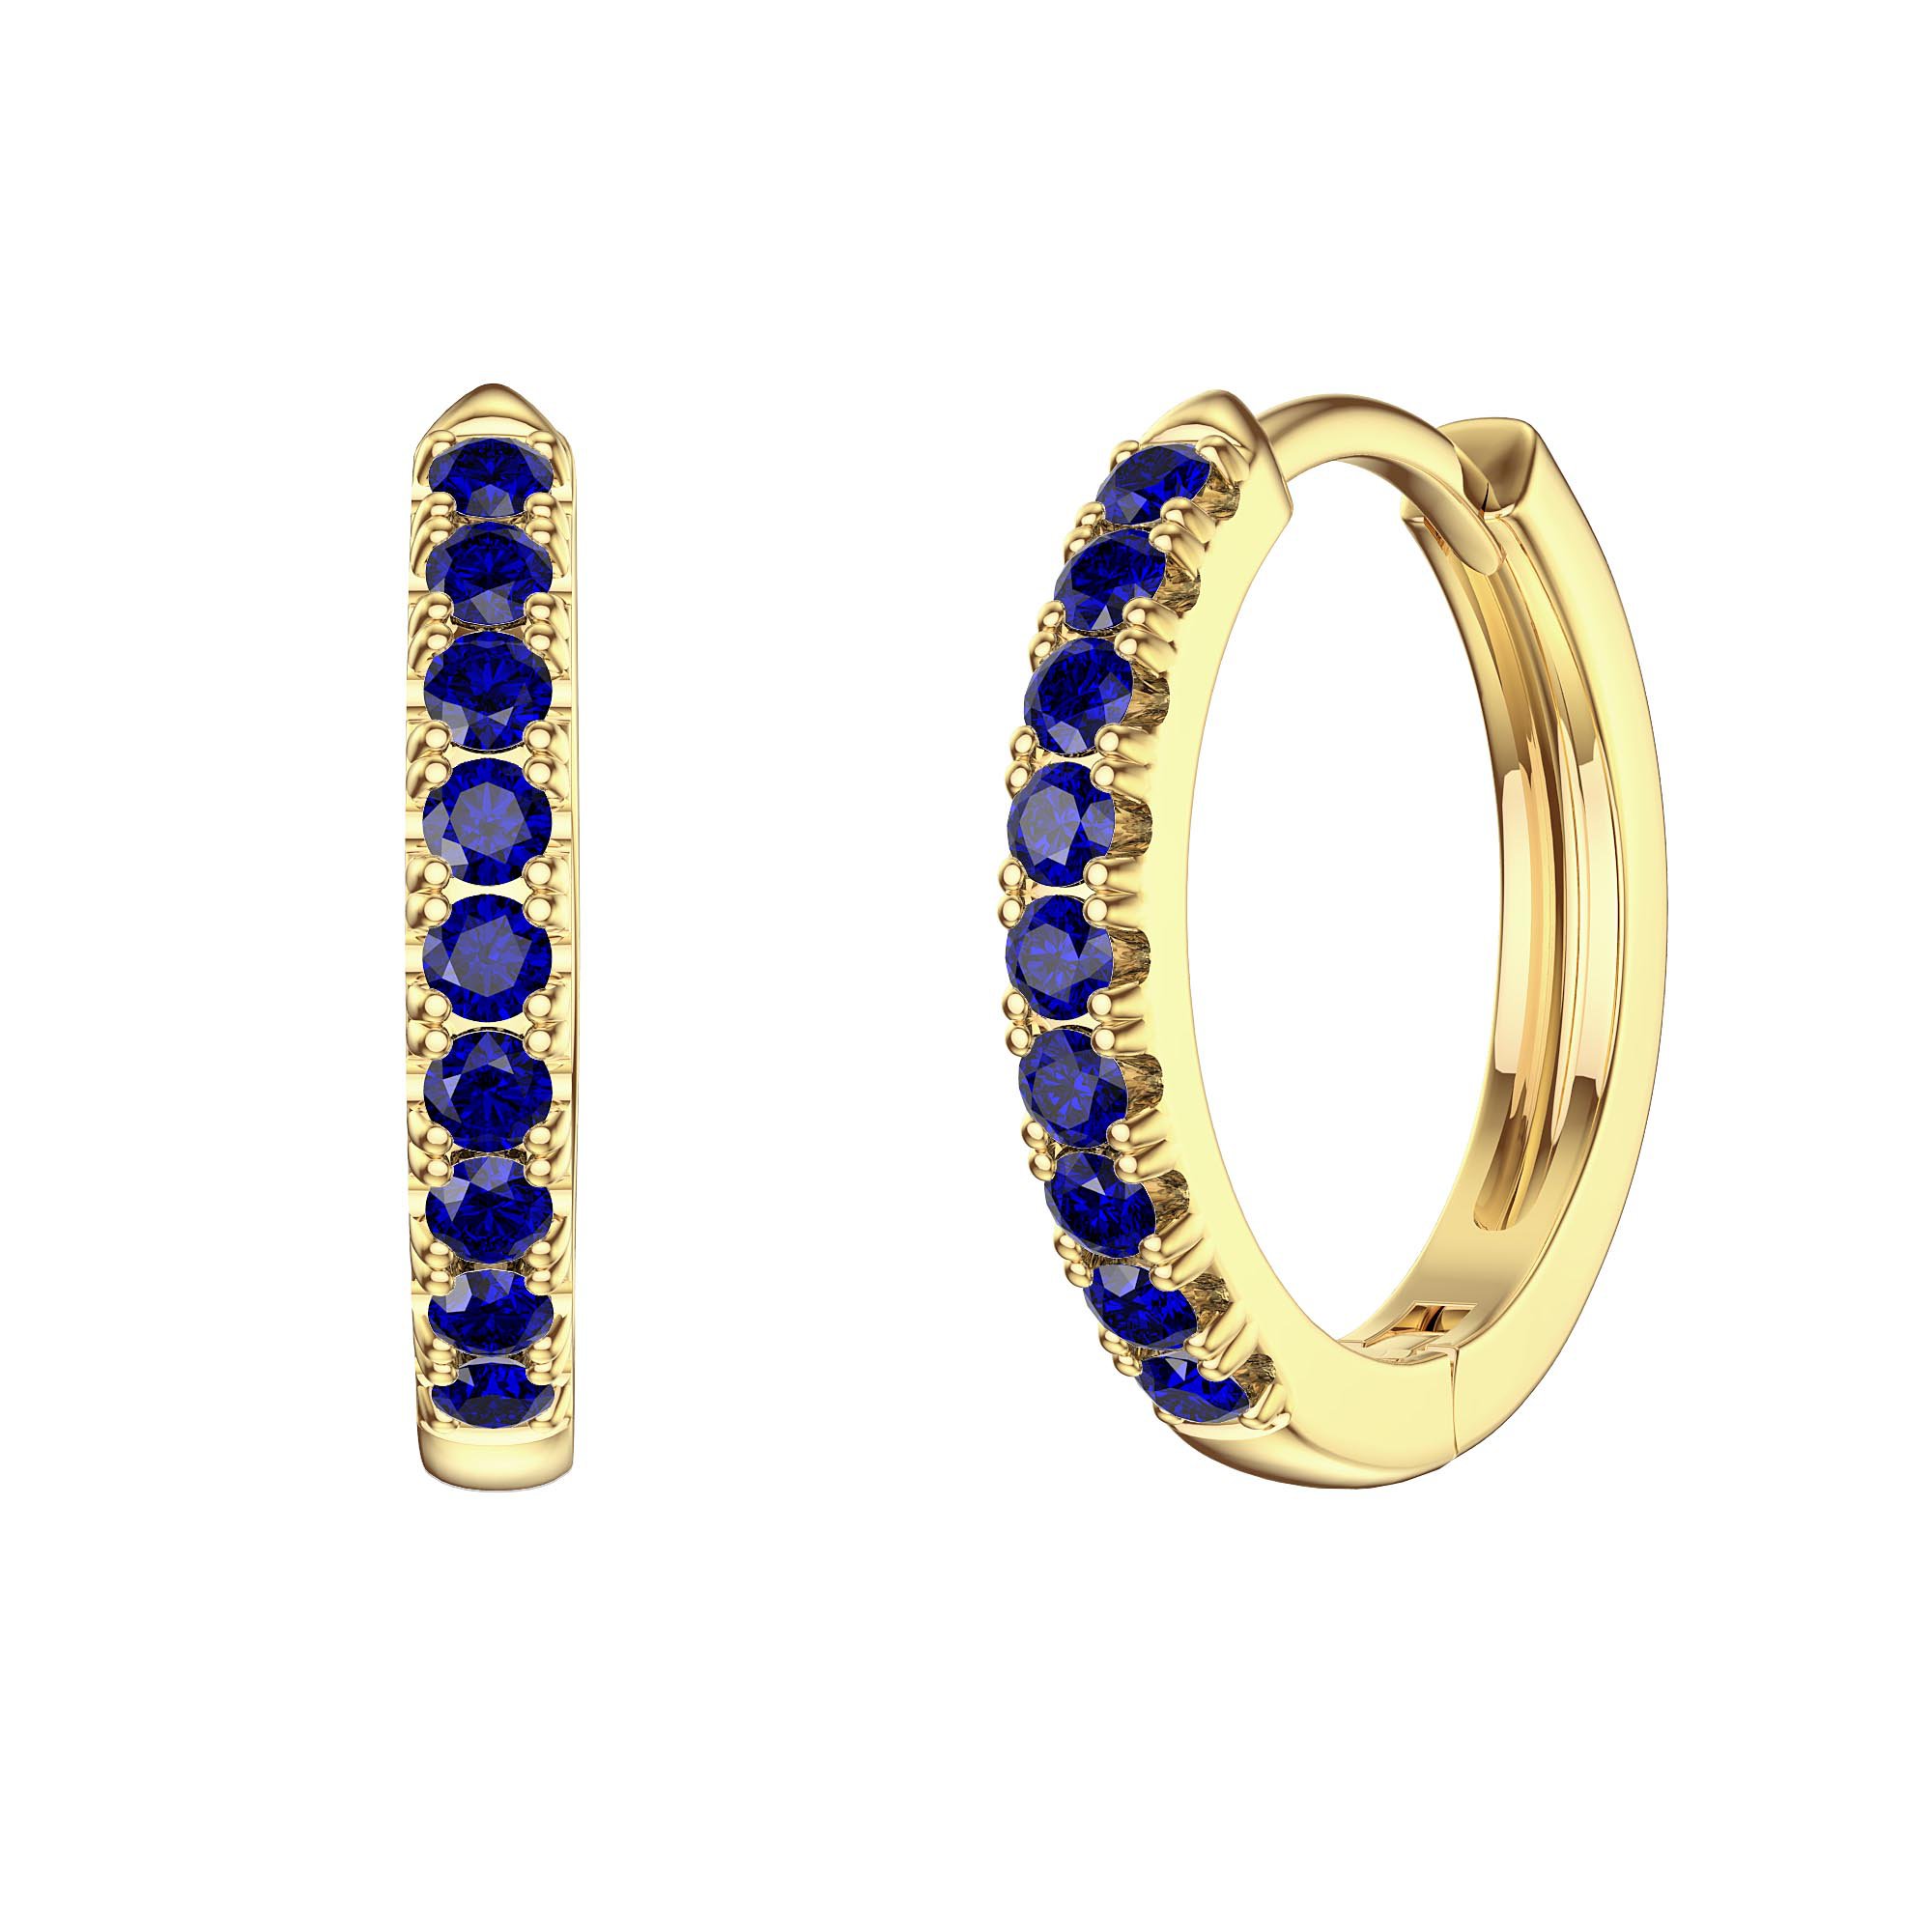 Charmisma Blue Sapphire 18K Gold Hoop Earrings Small:Jian London:18K ...